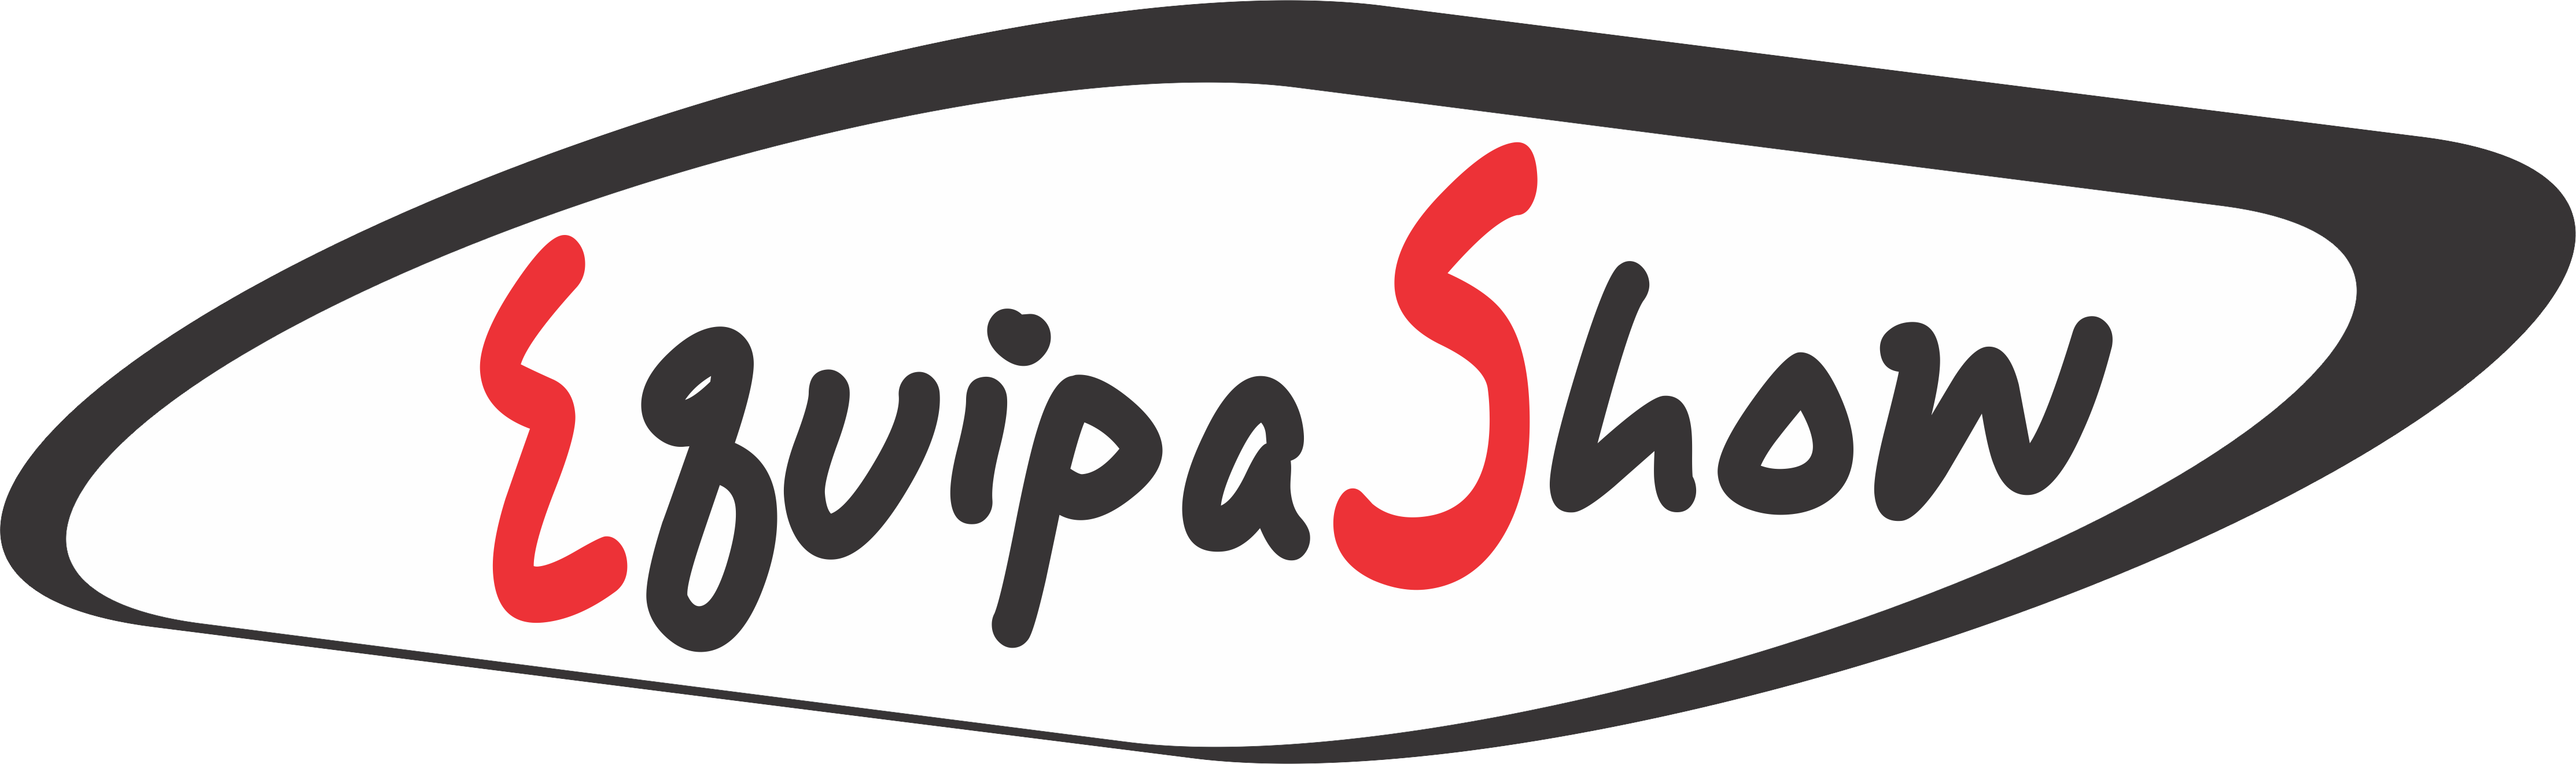 Logo Equipashow